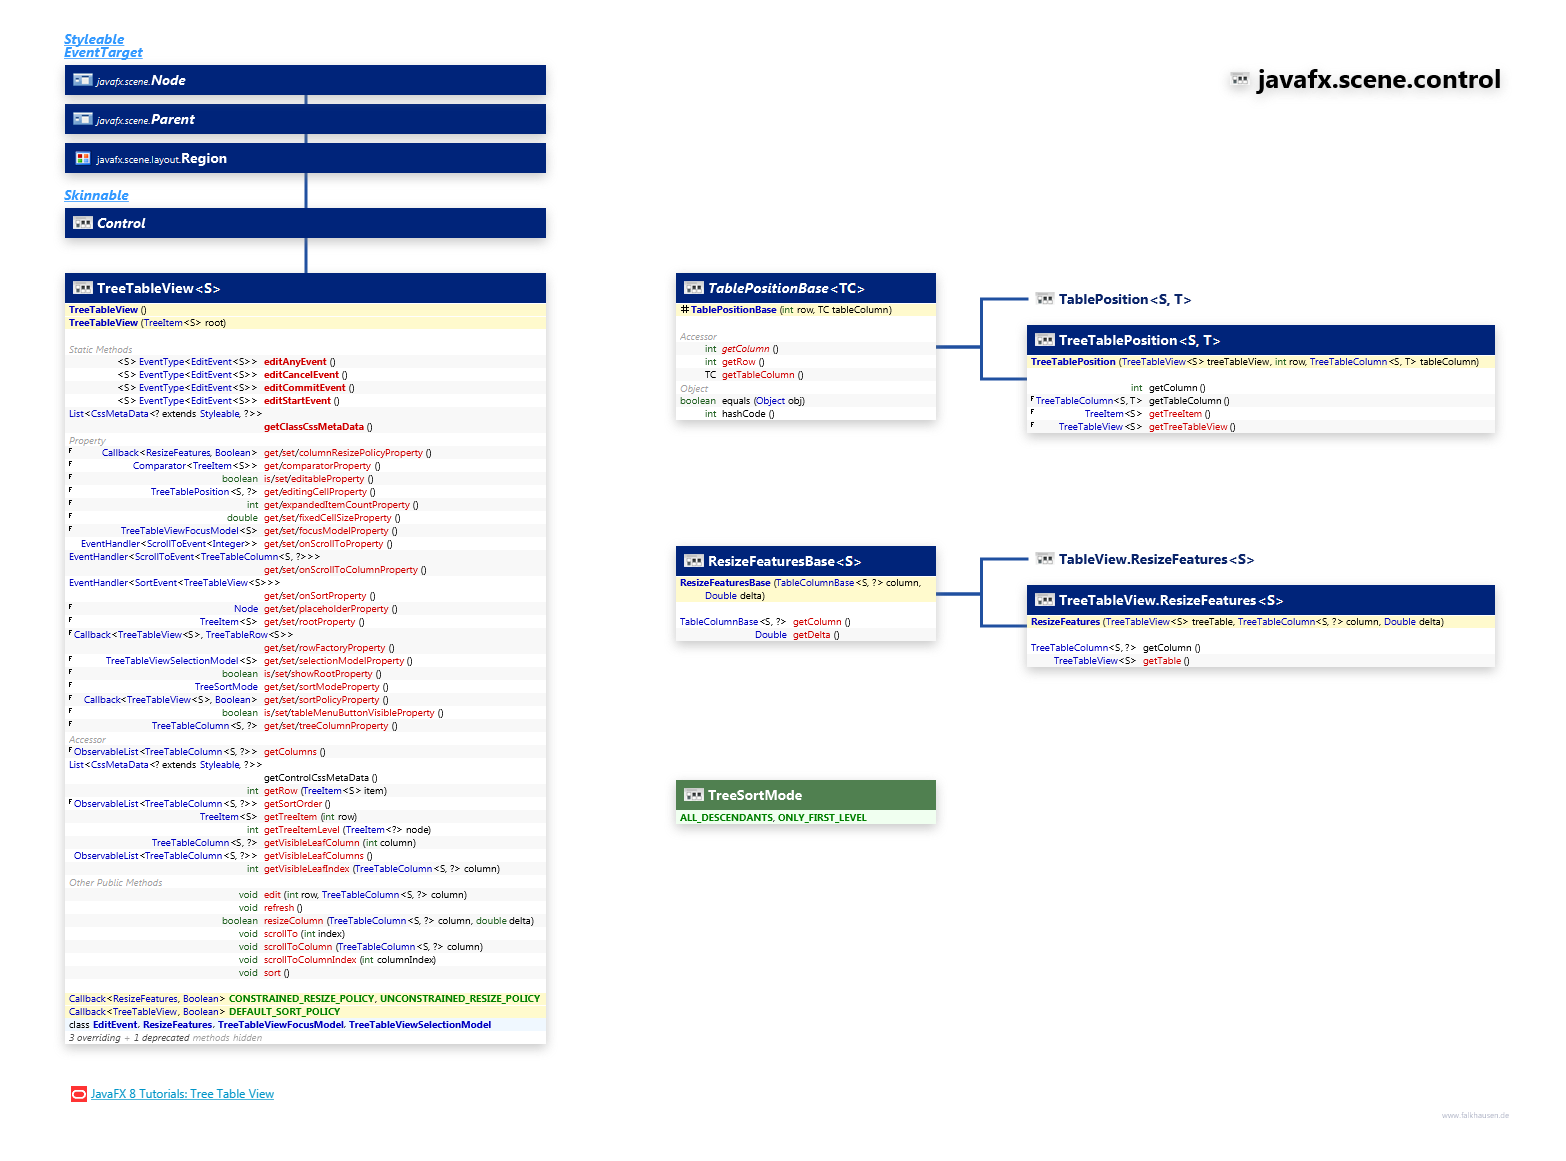 javafx.scene.control TreeTable class diagram and api documentation for JavaFX 10